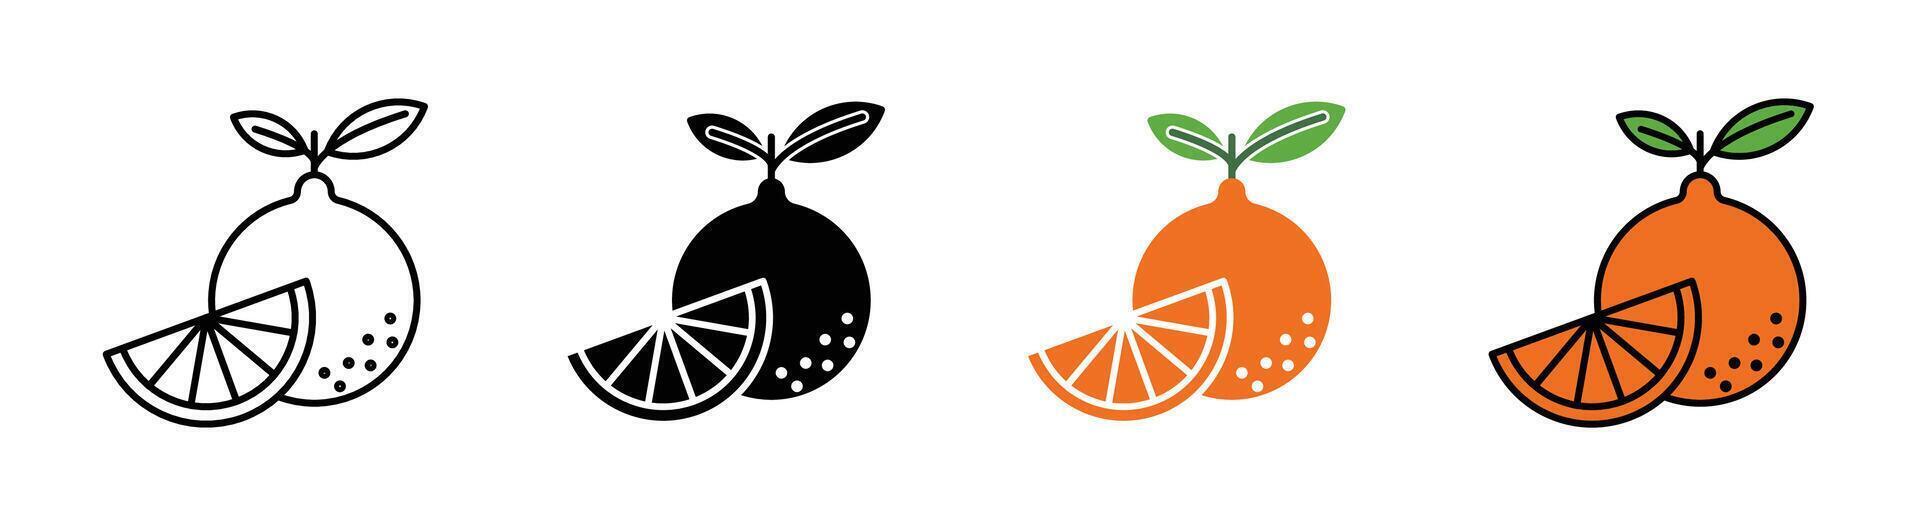 Zitrusfrüchte Obst Symbol vektor